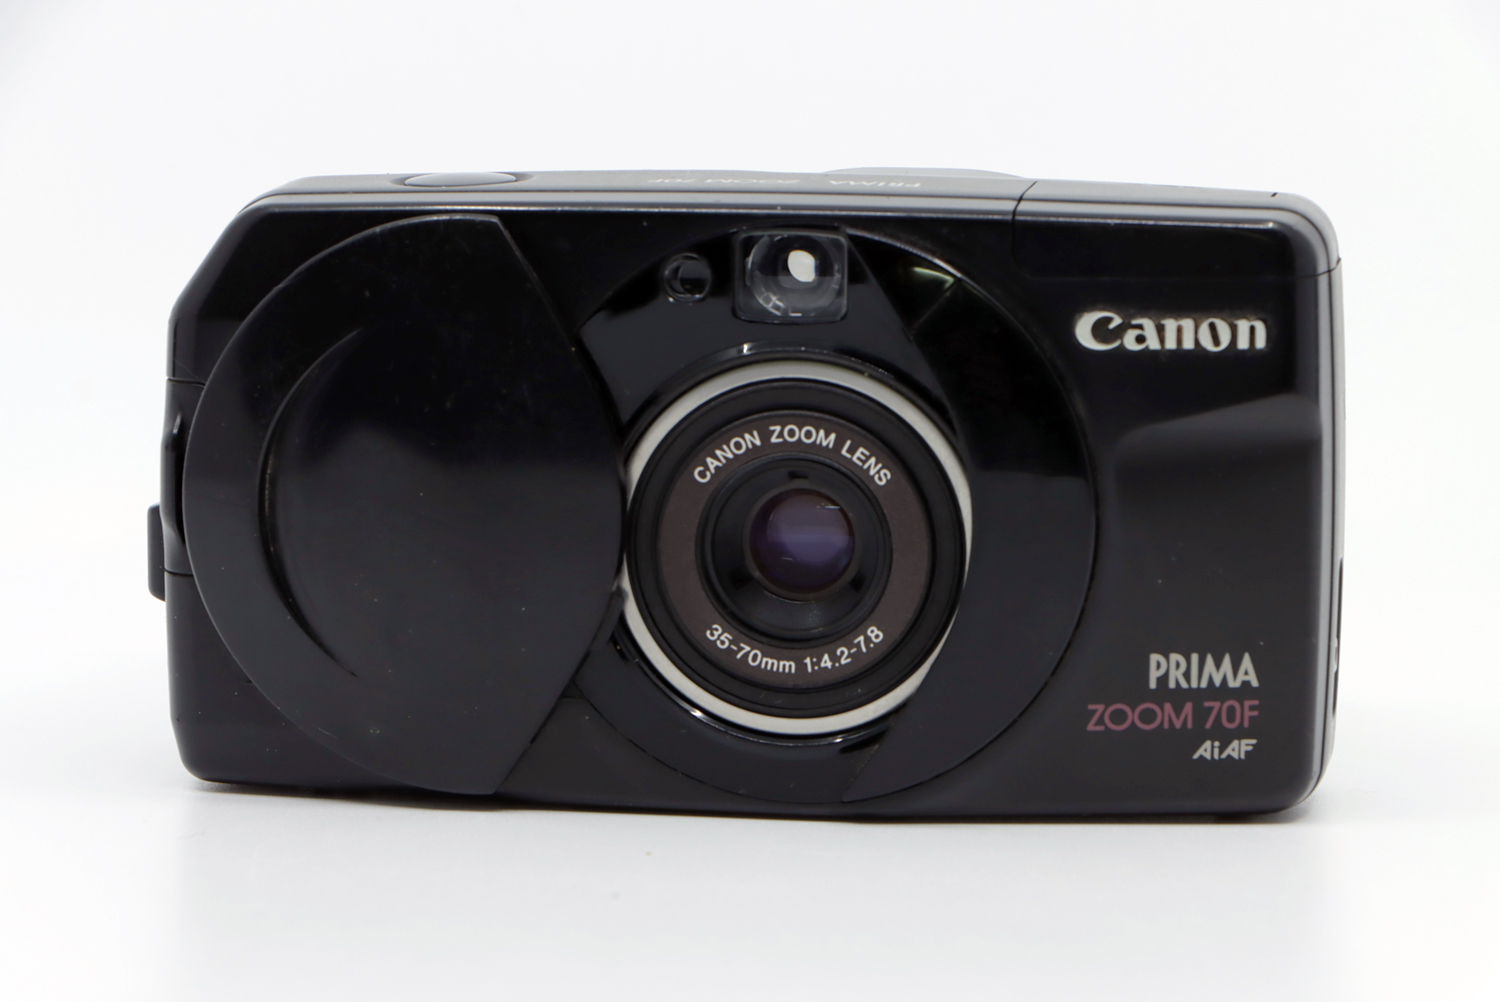 Canon Prima Zoom 70F | IMG_2809.JPG